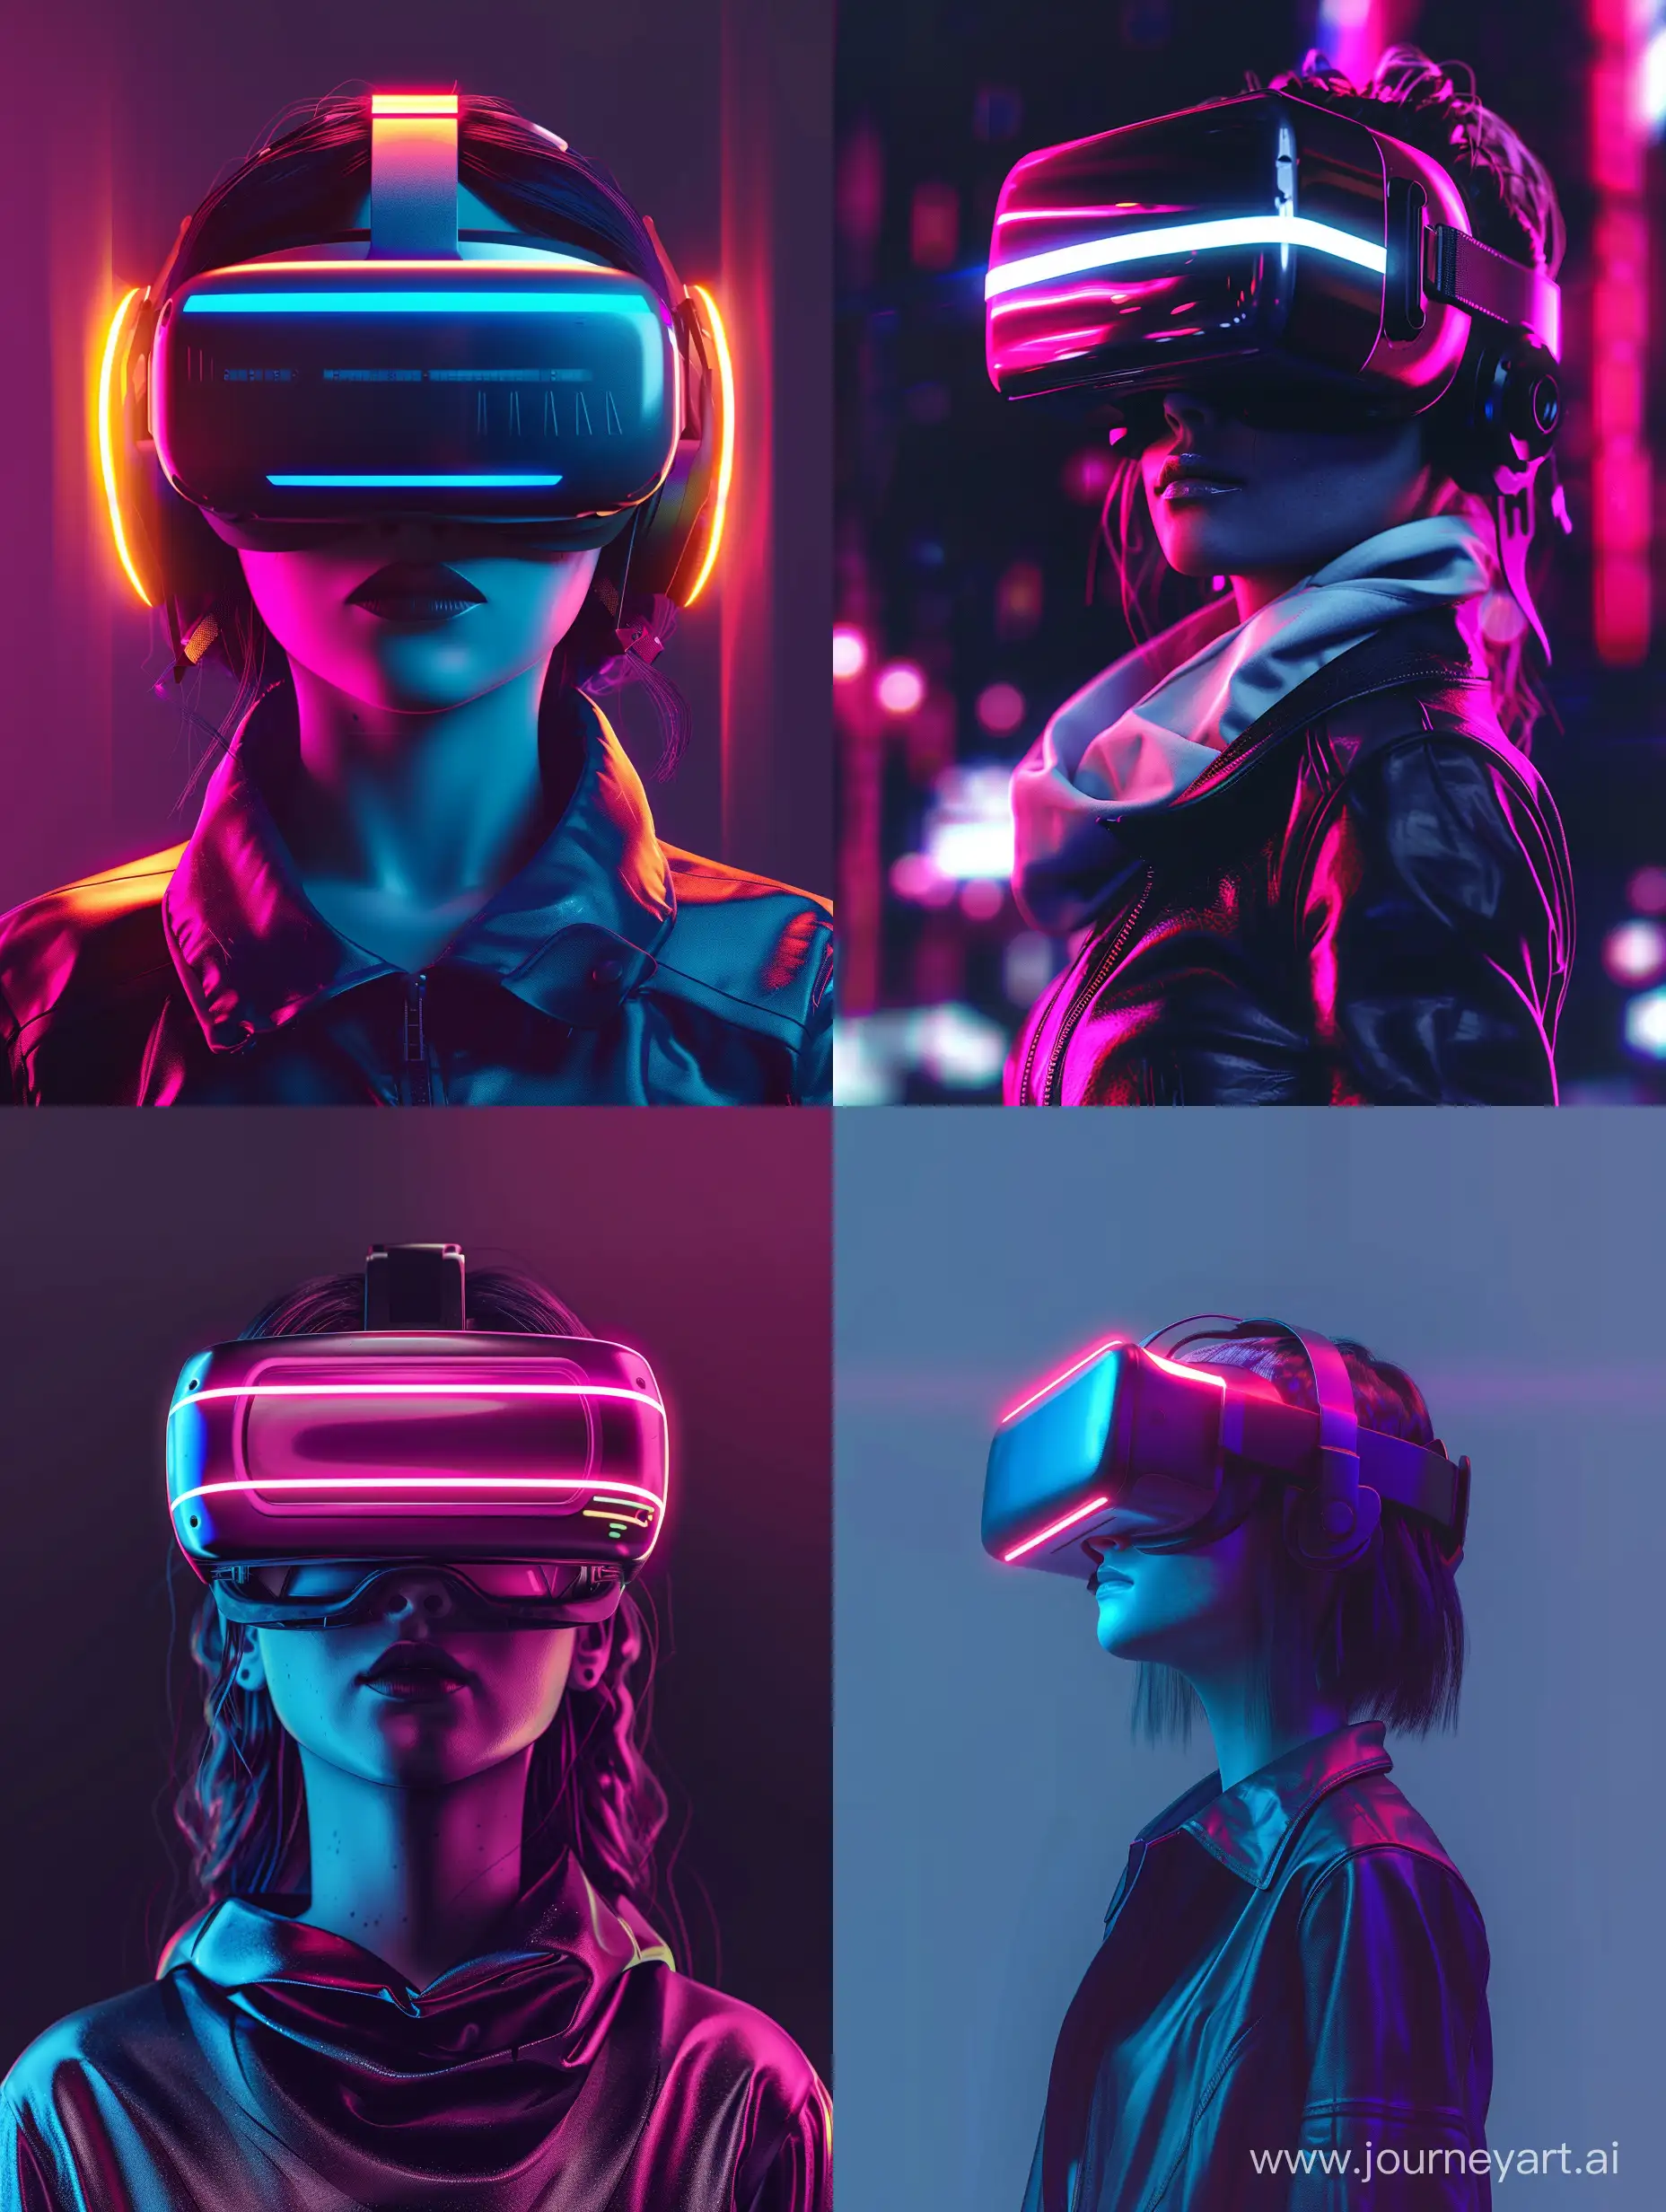 Futuristic-Cyberpunk-Girl-with-VR-Headset-in-Subtle-Neon-Lighting